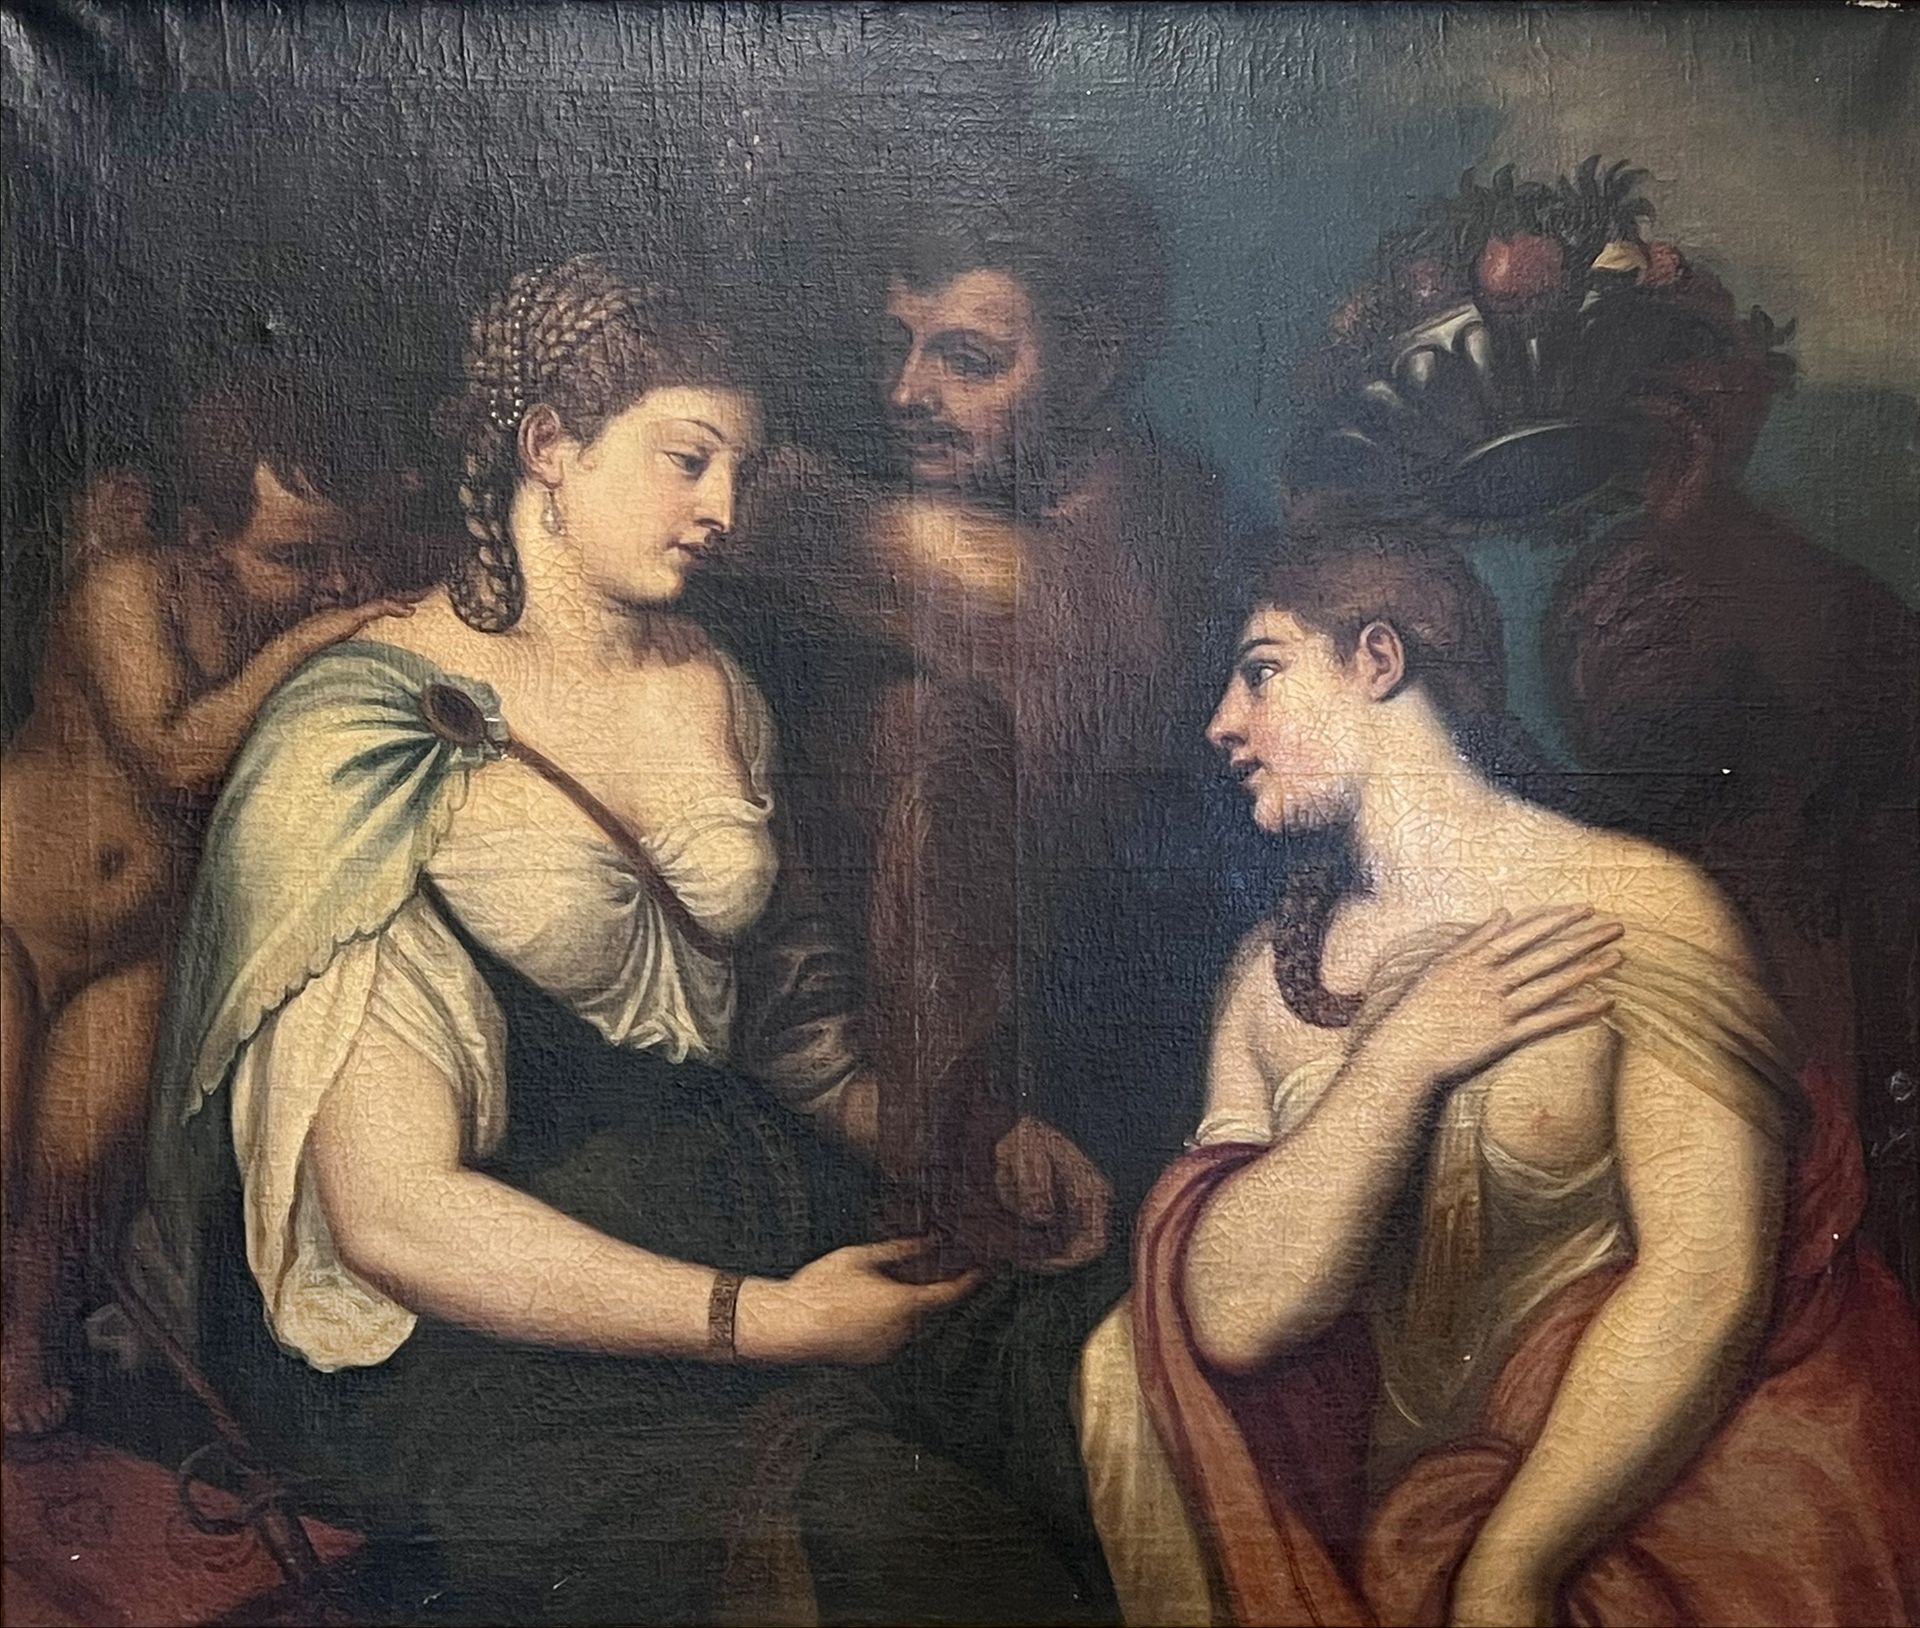 TIZIANO VECELLIO known as TIZIAN (1485 - 1576) Copy after. "Venus, Bacchus and Ceres."